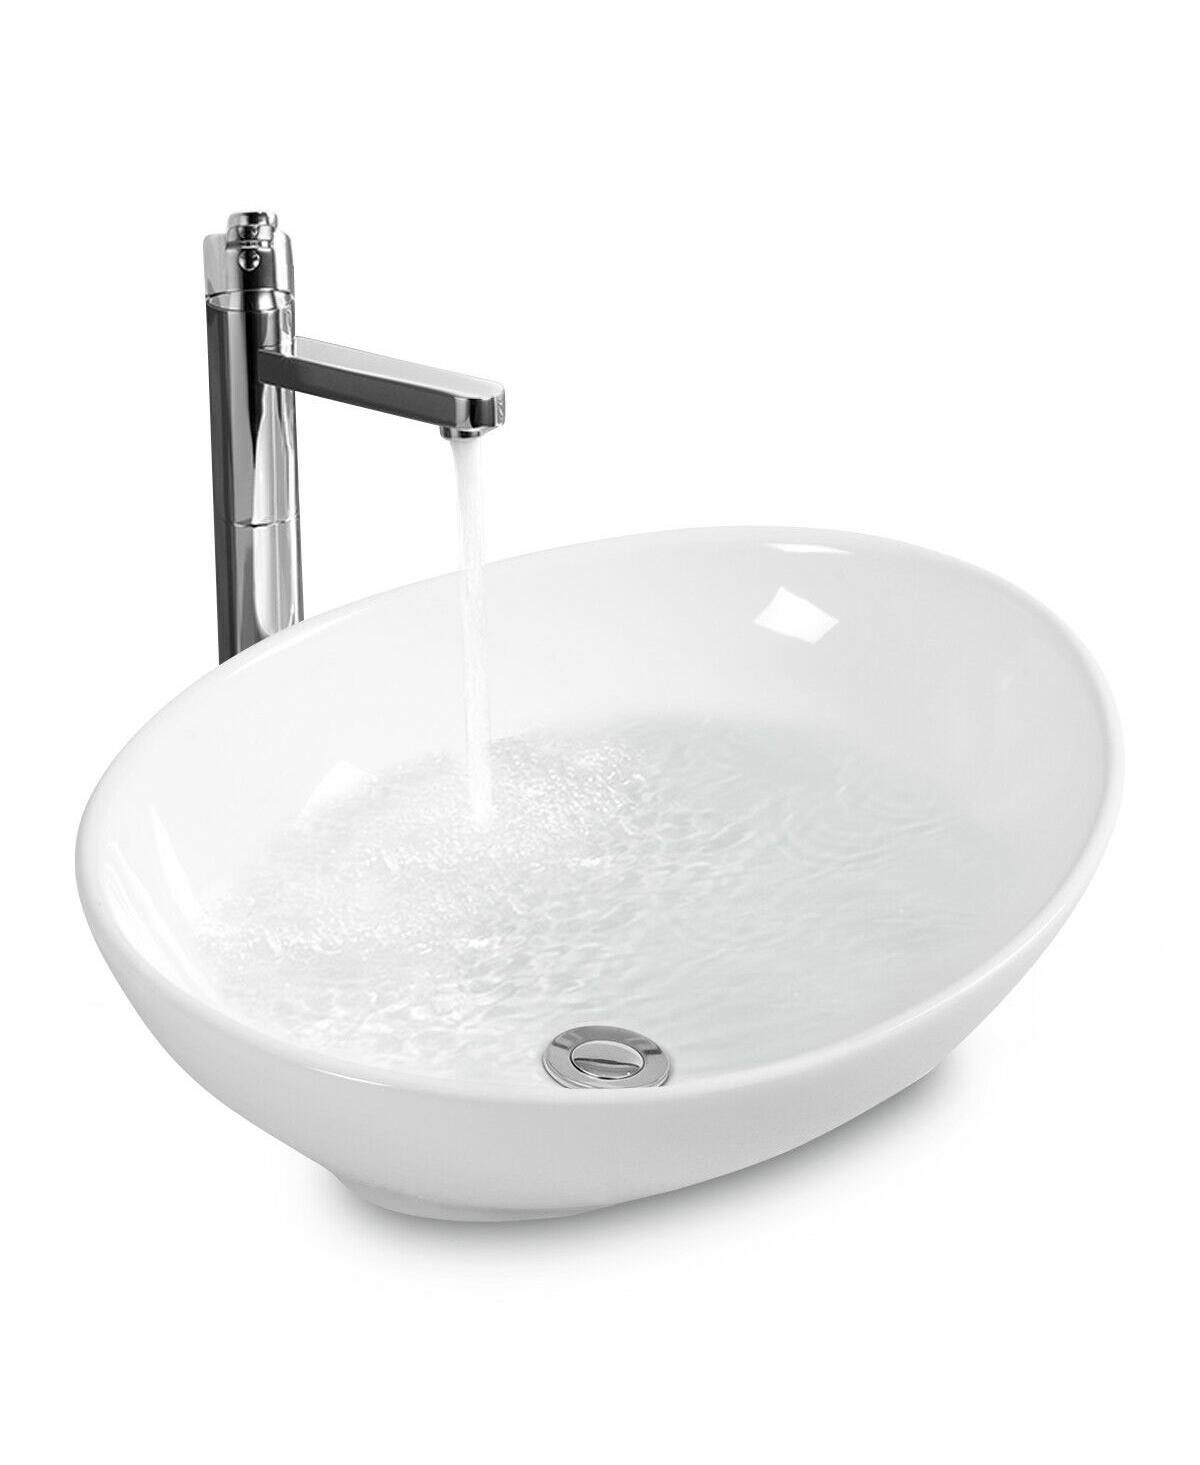 Oval Bathroom Basin Ceramic Vessel Sink - White